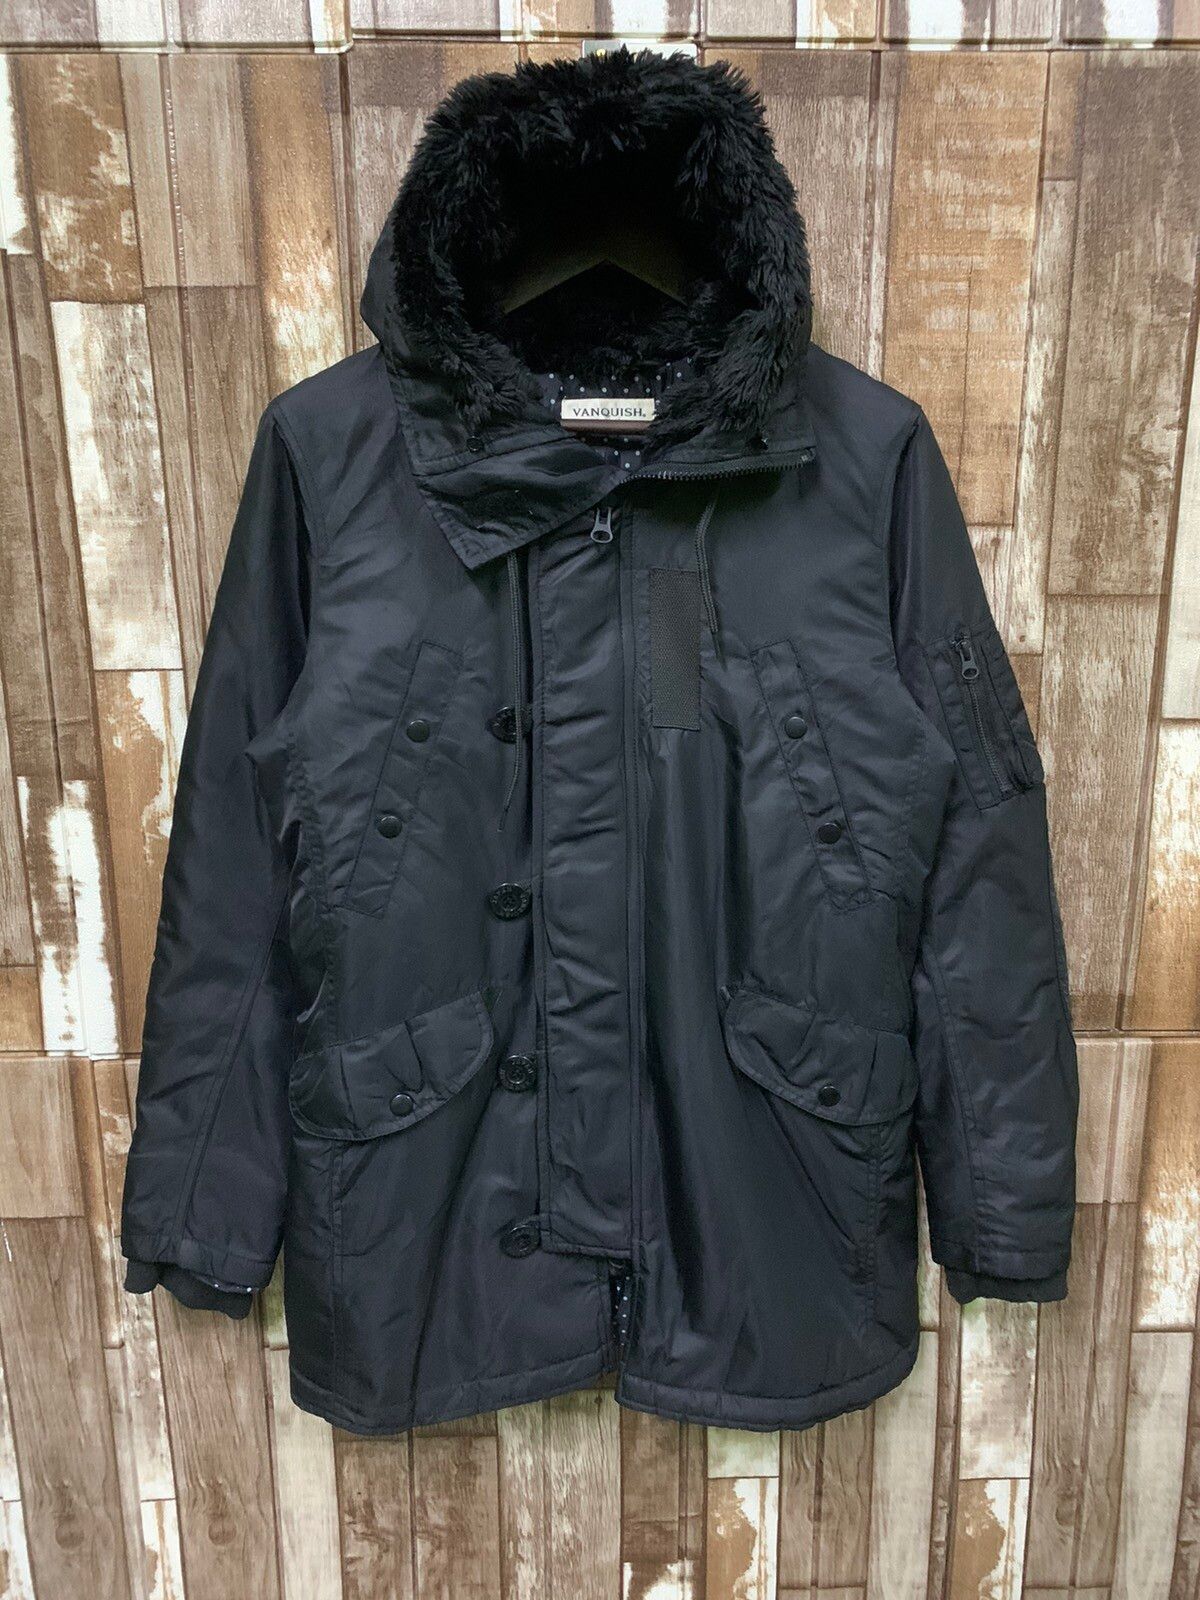 Vanquish Vanquish Tokyo Japan Fur Hood Winter N-3B Style Parka Jacket ...